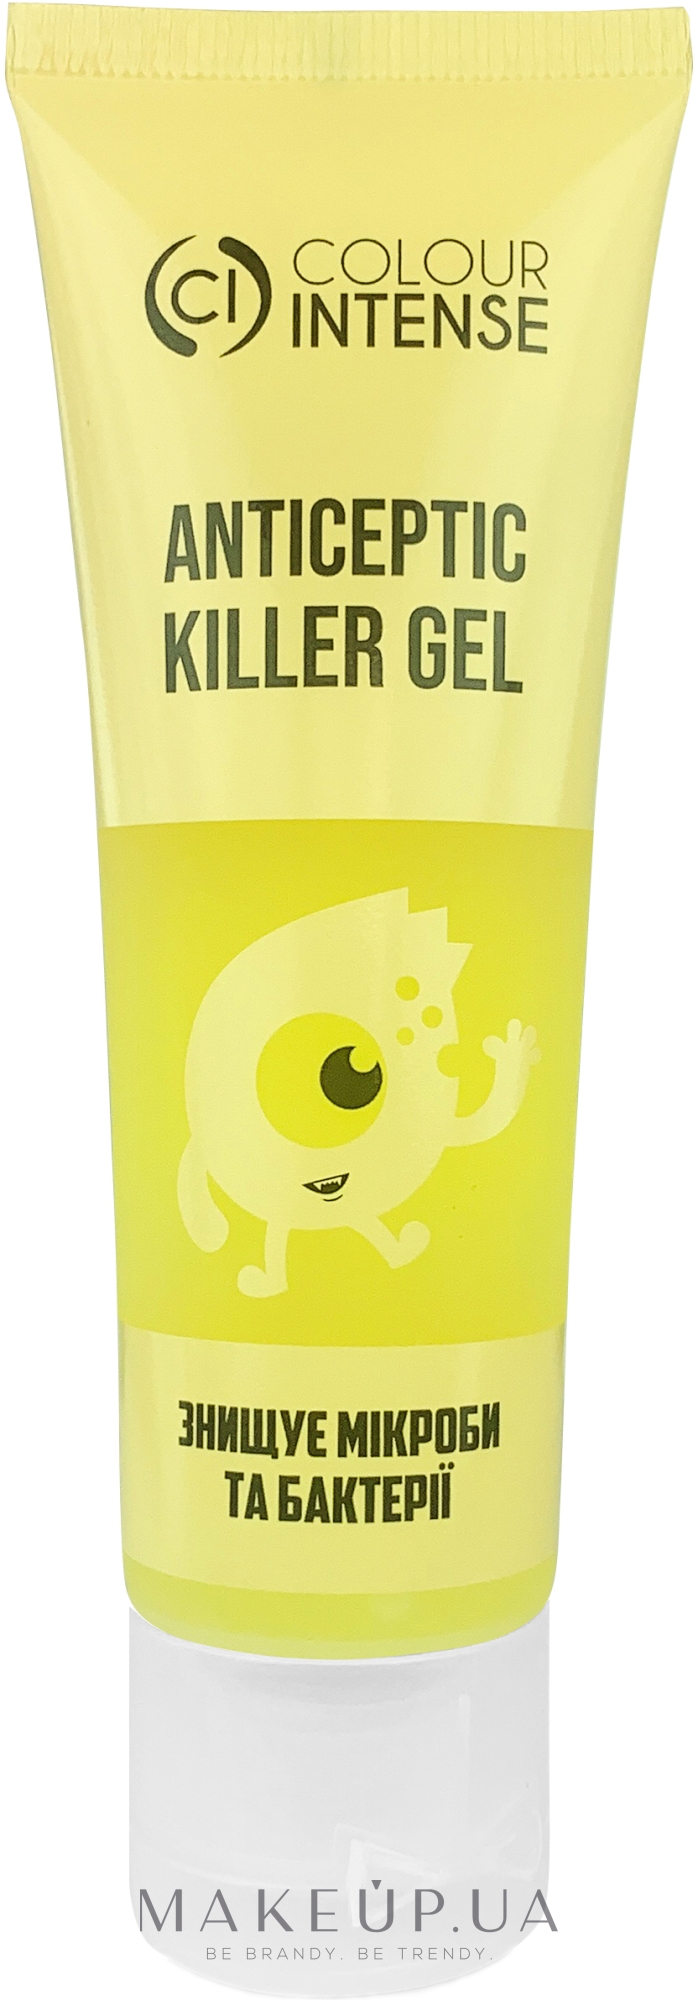 Антисептичний гель для рук "Цитрус" (60% спирту) - Colour Intense Antiseptic Killer Gel Citrus — фото 50ml